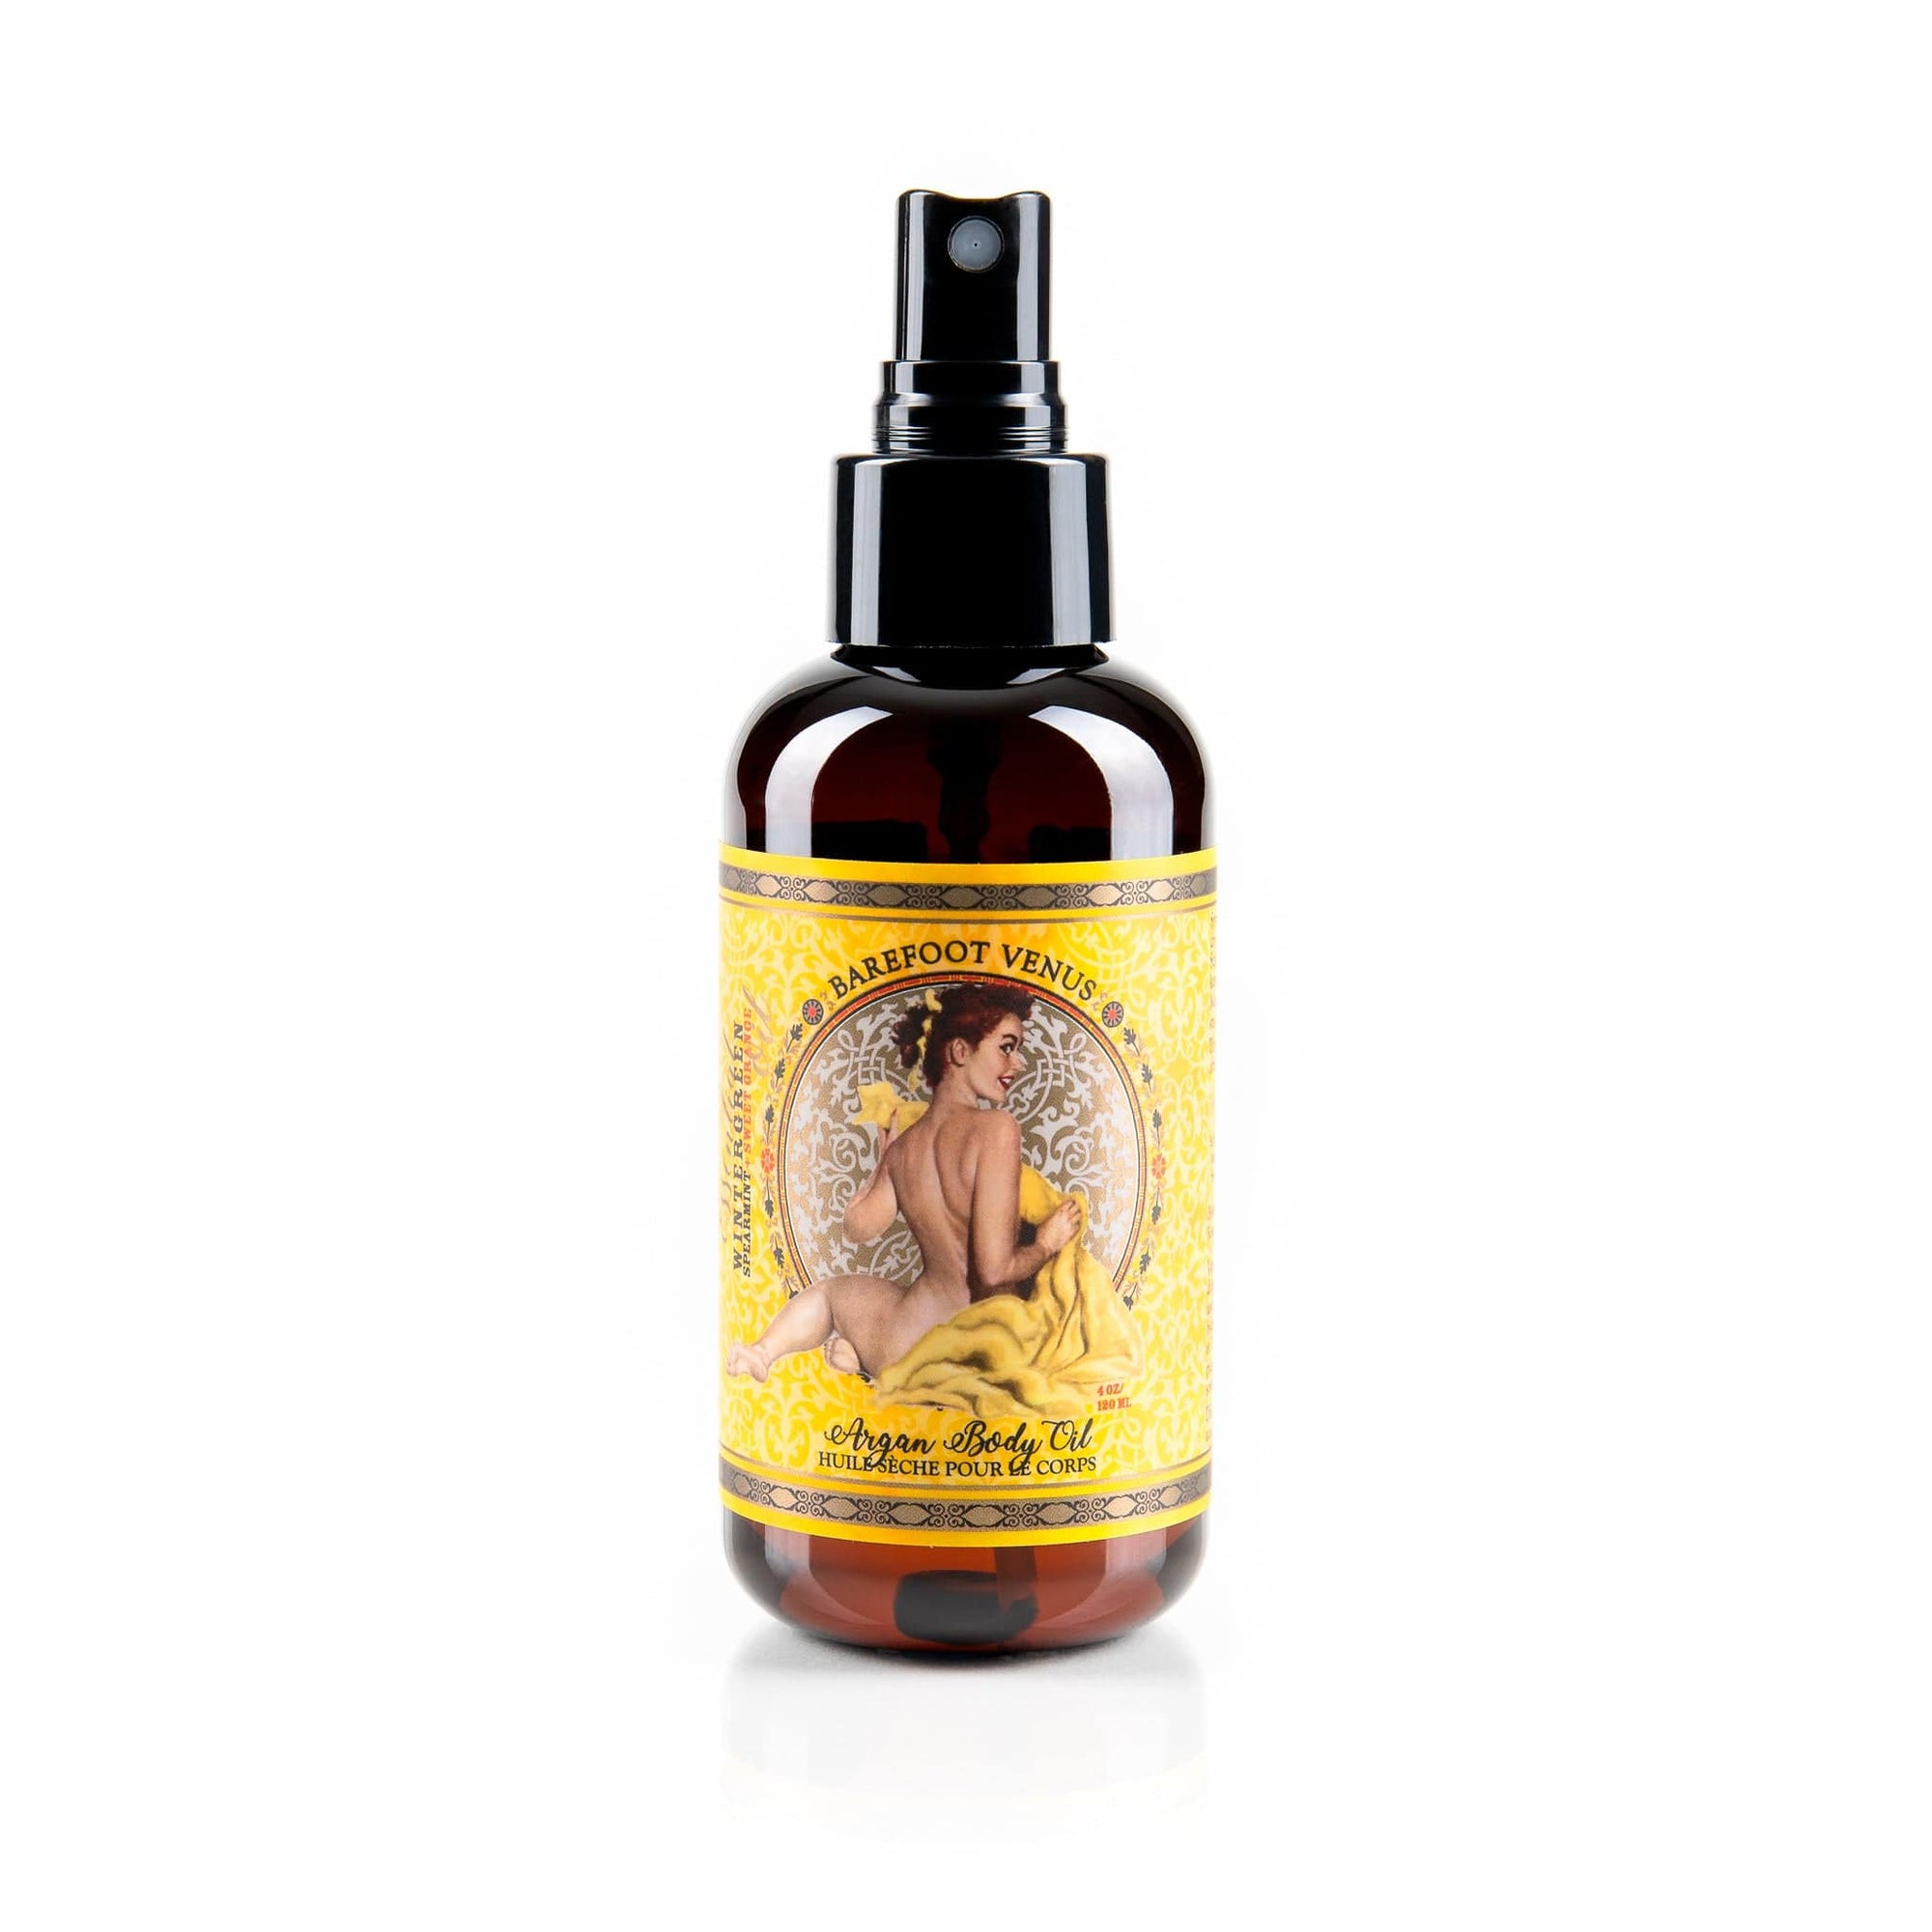 Essential Oil Argan Body Oil PROTECTIVE. DEWY FINISH. Barefoot Venus